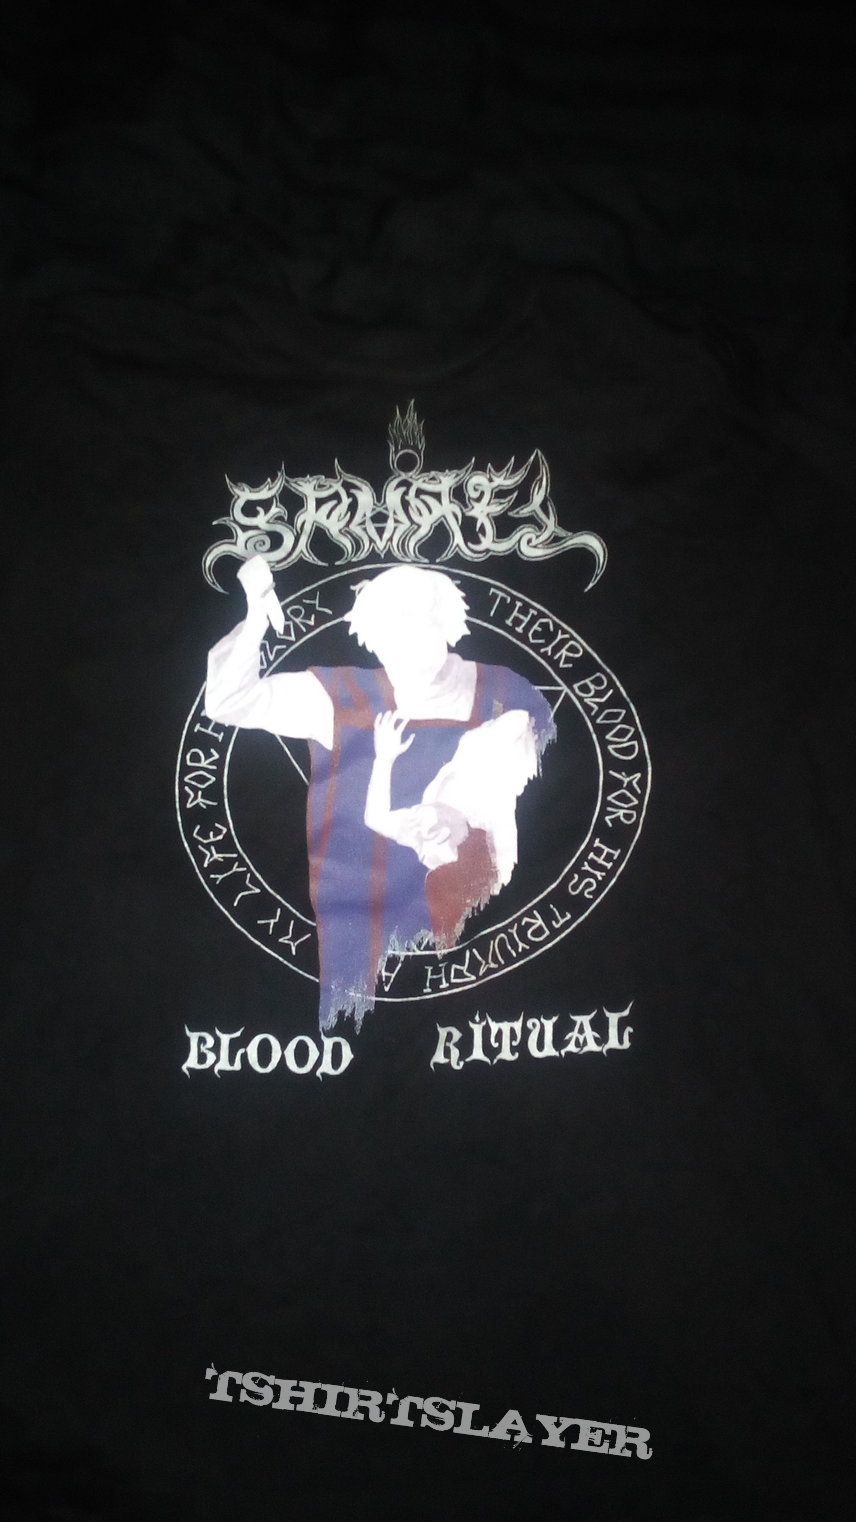 Samael blood ritual tour shirt